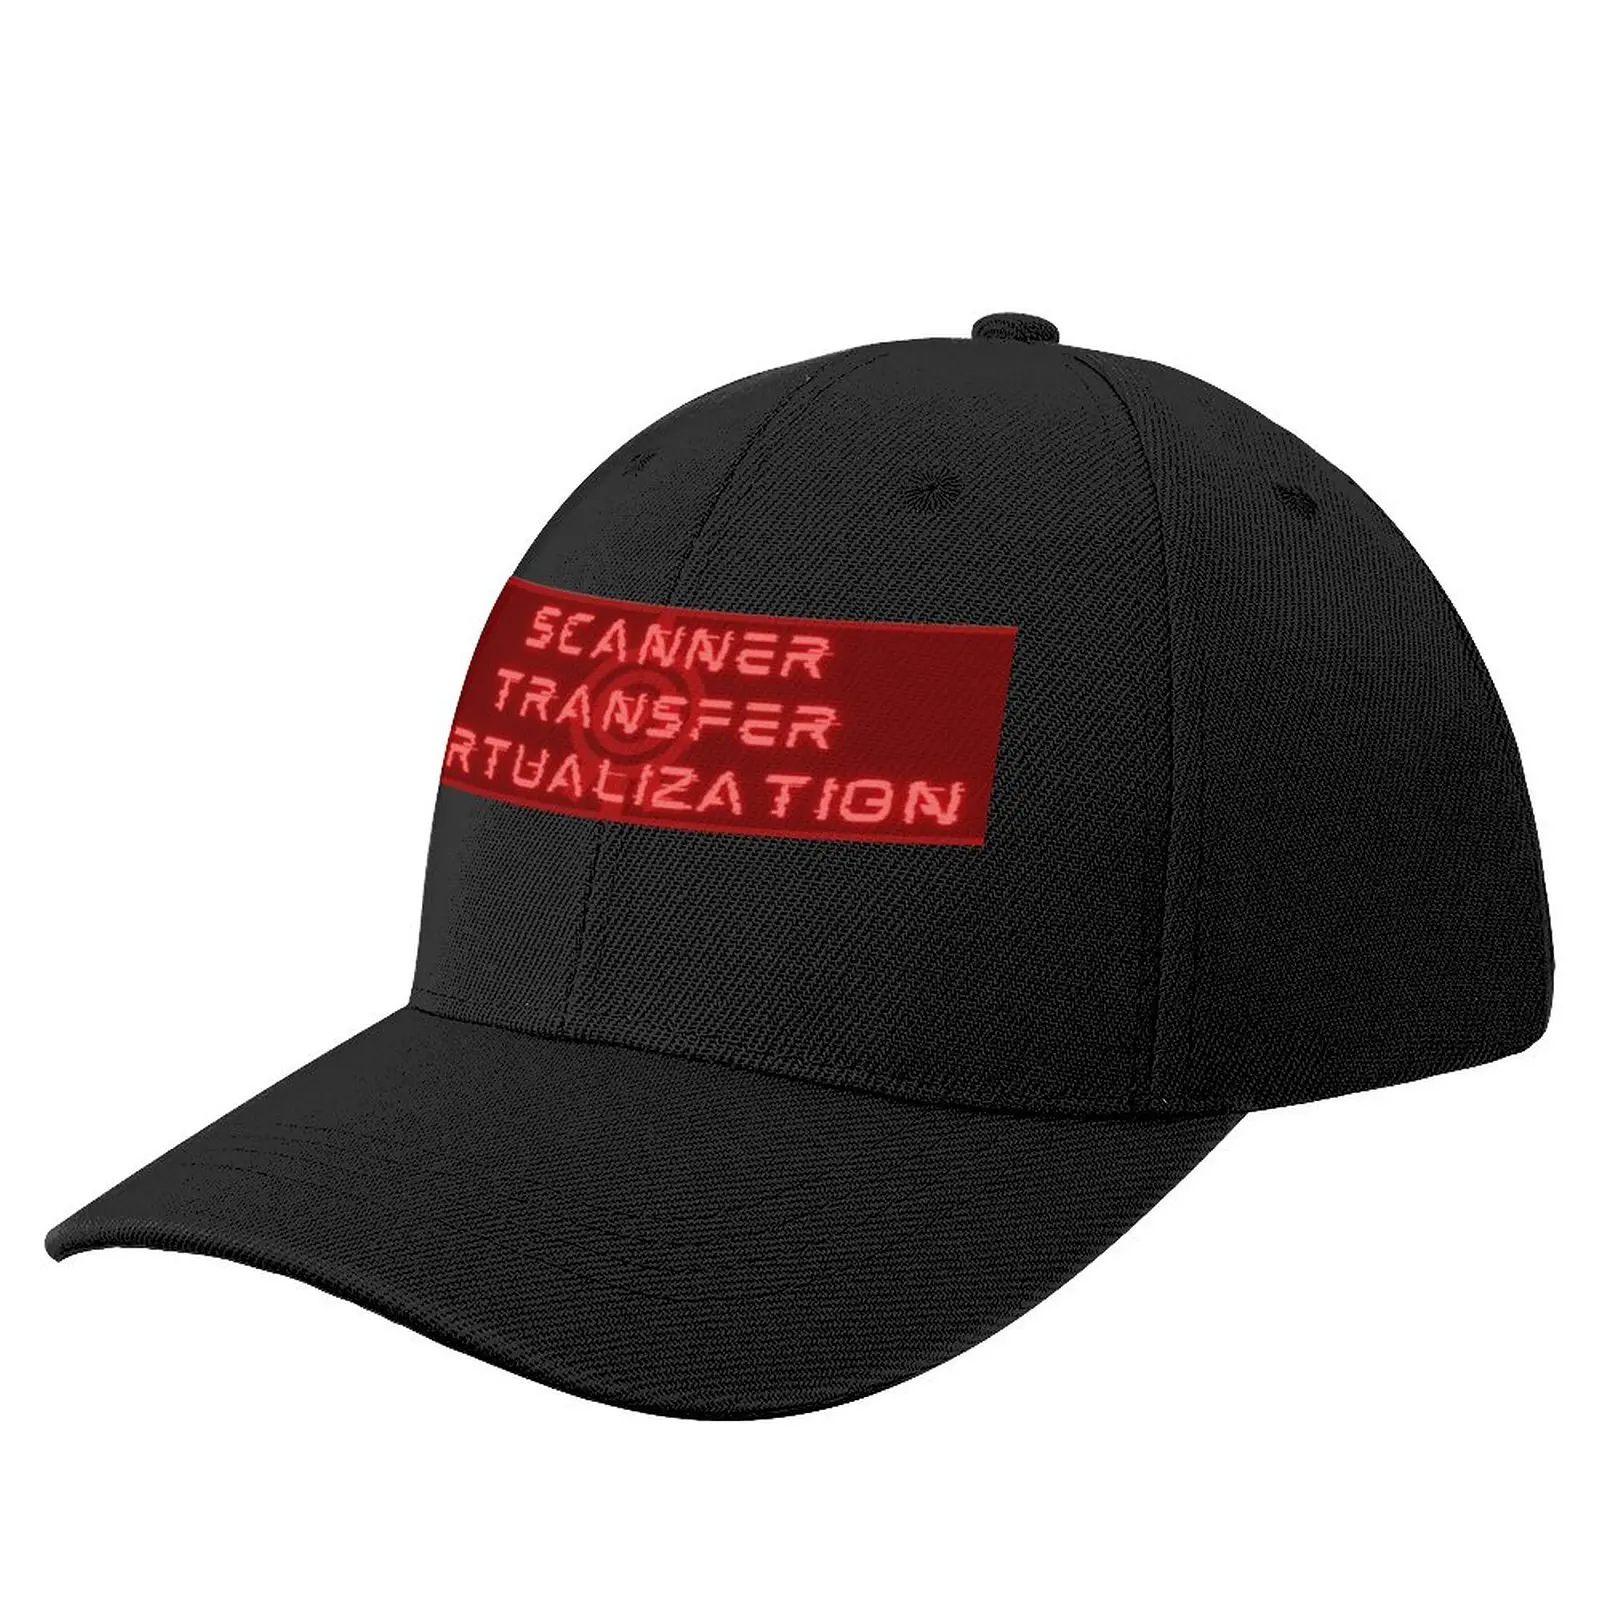 

Scanner, Transfer, Virtualization! - Xana Red Baseball Cap |-F-| tea hats Horse Hat Hats For Women Men's